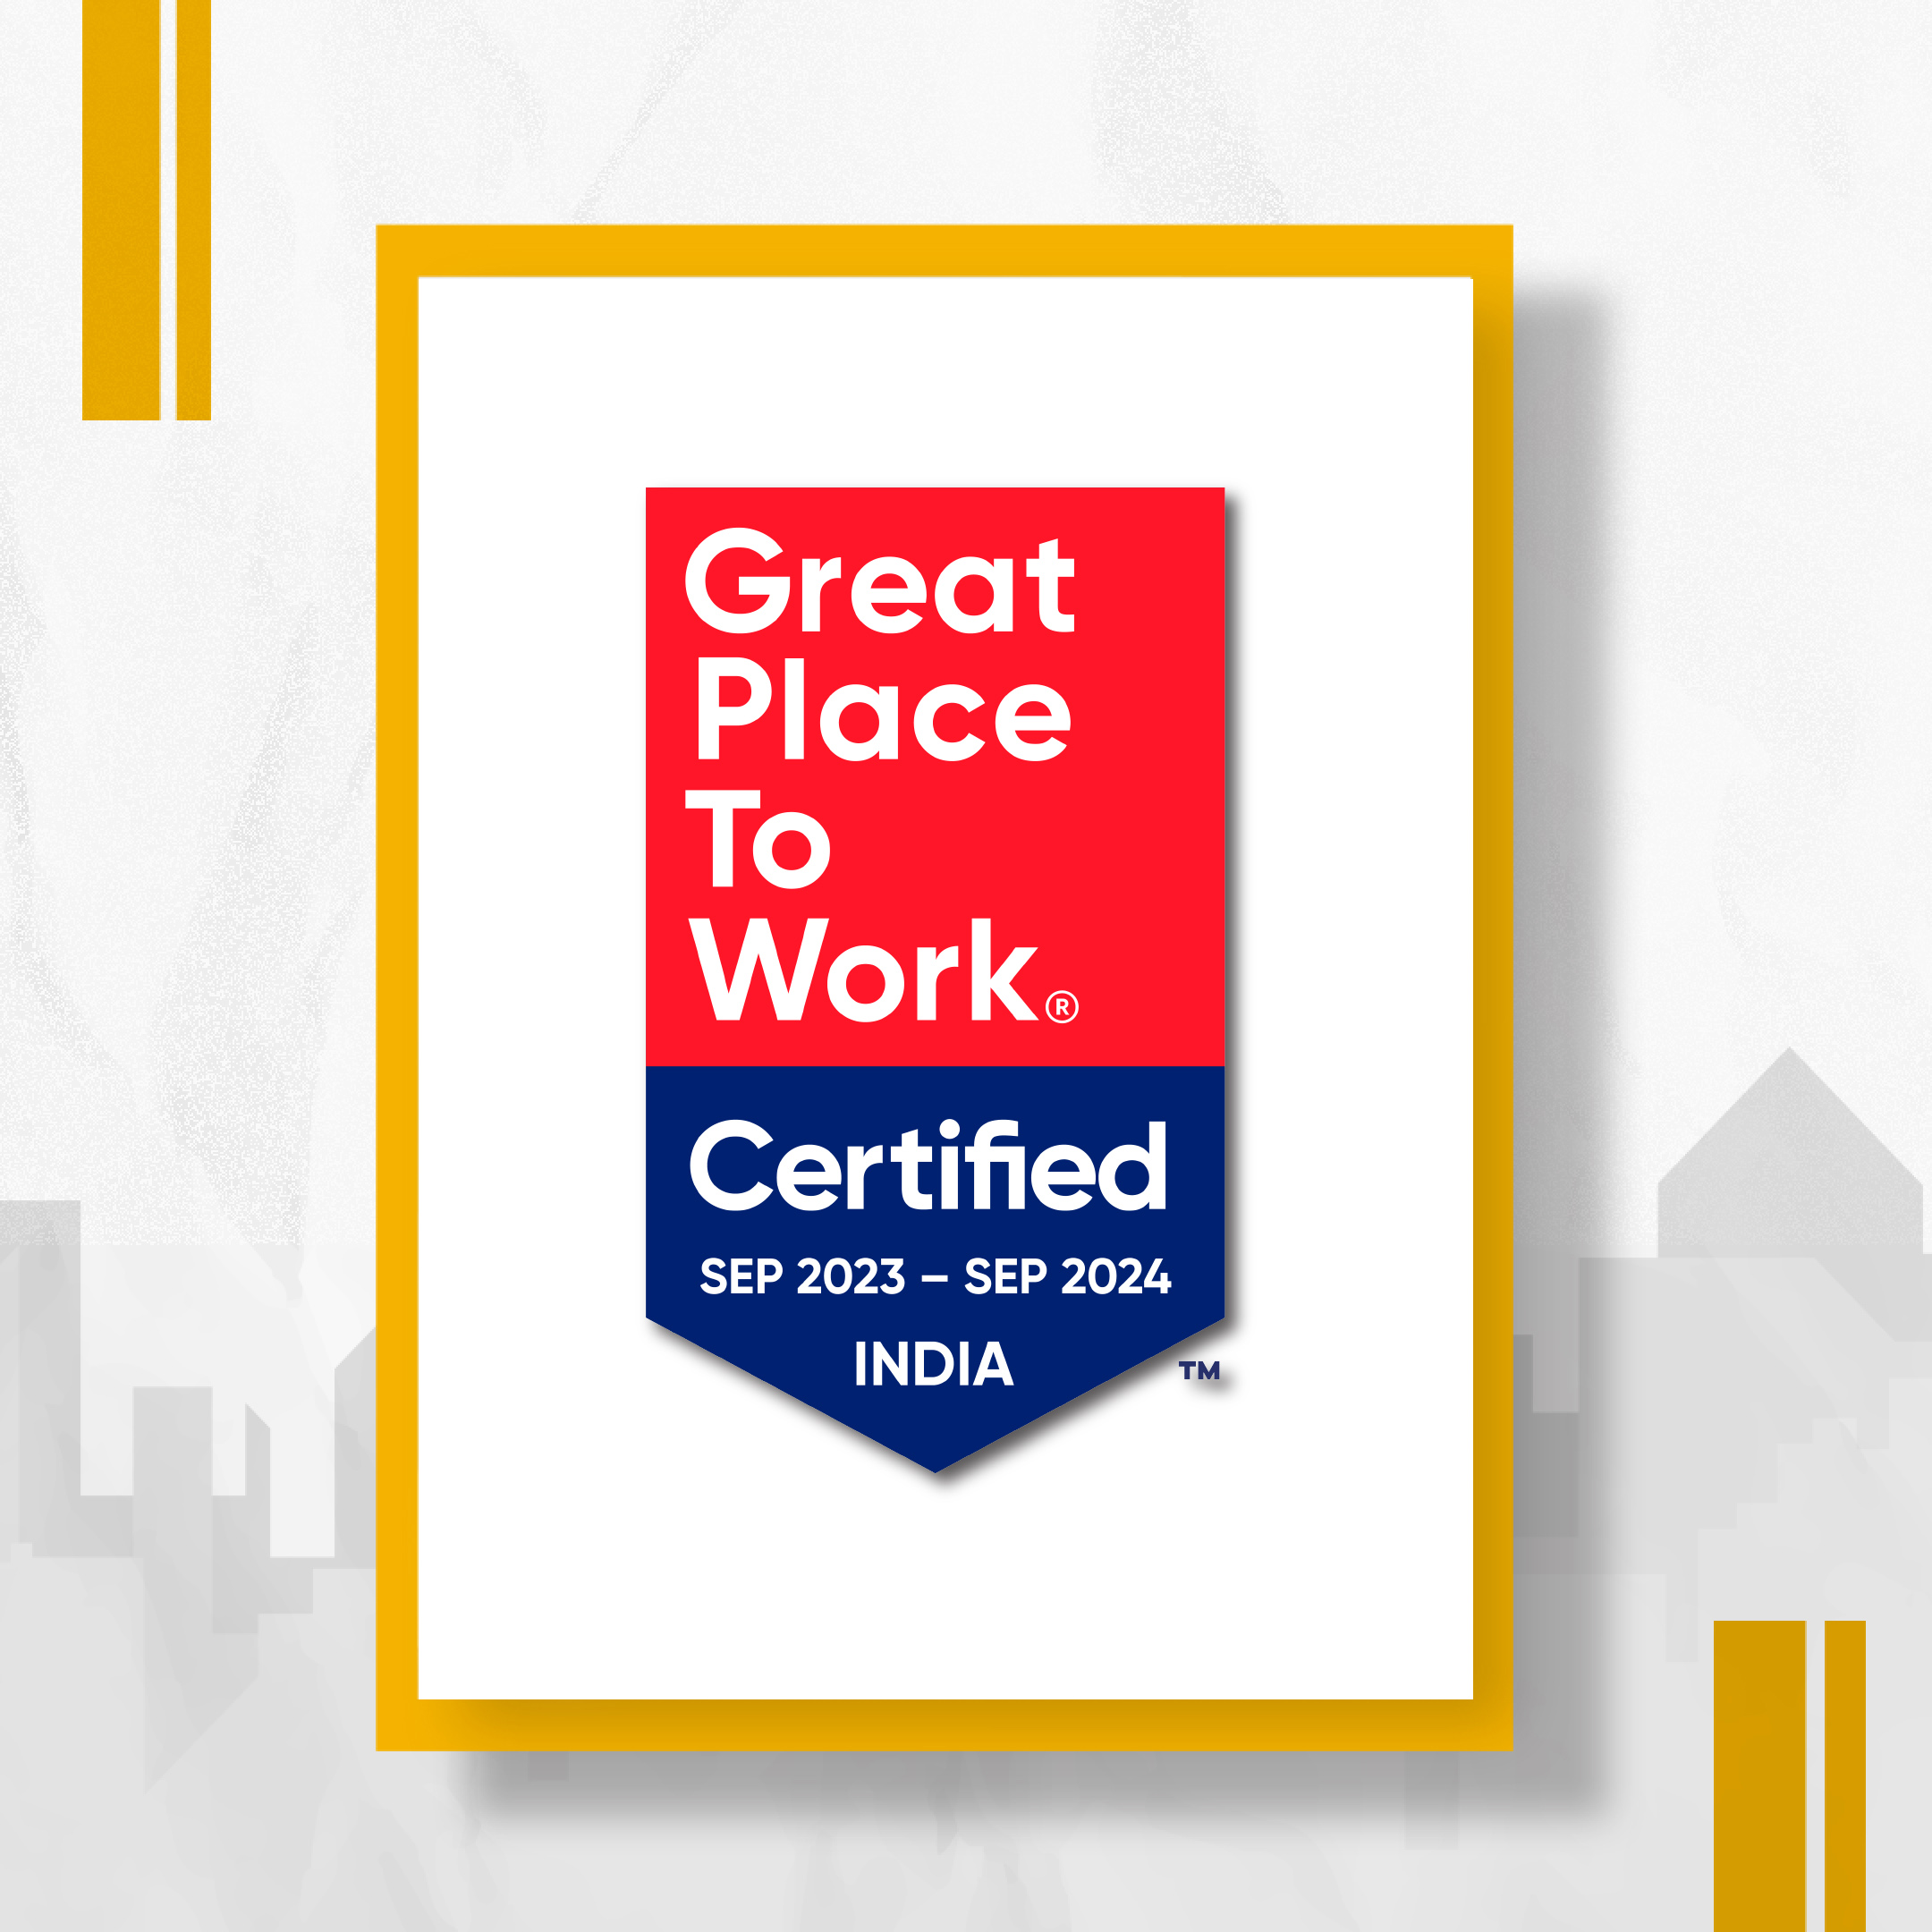 Great Place to Work Certified - Shriram Properties